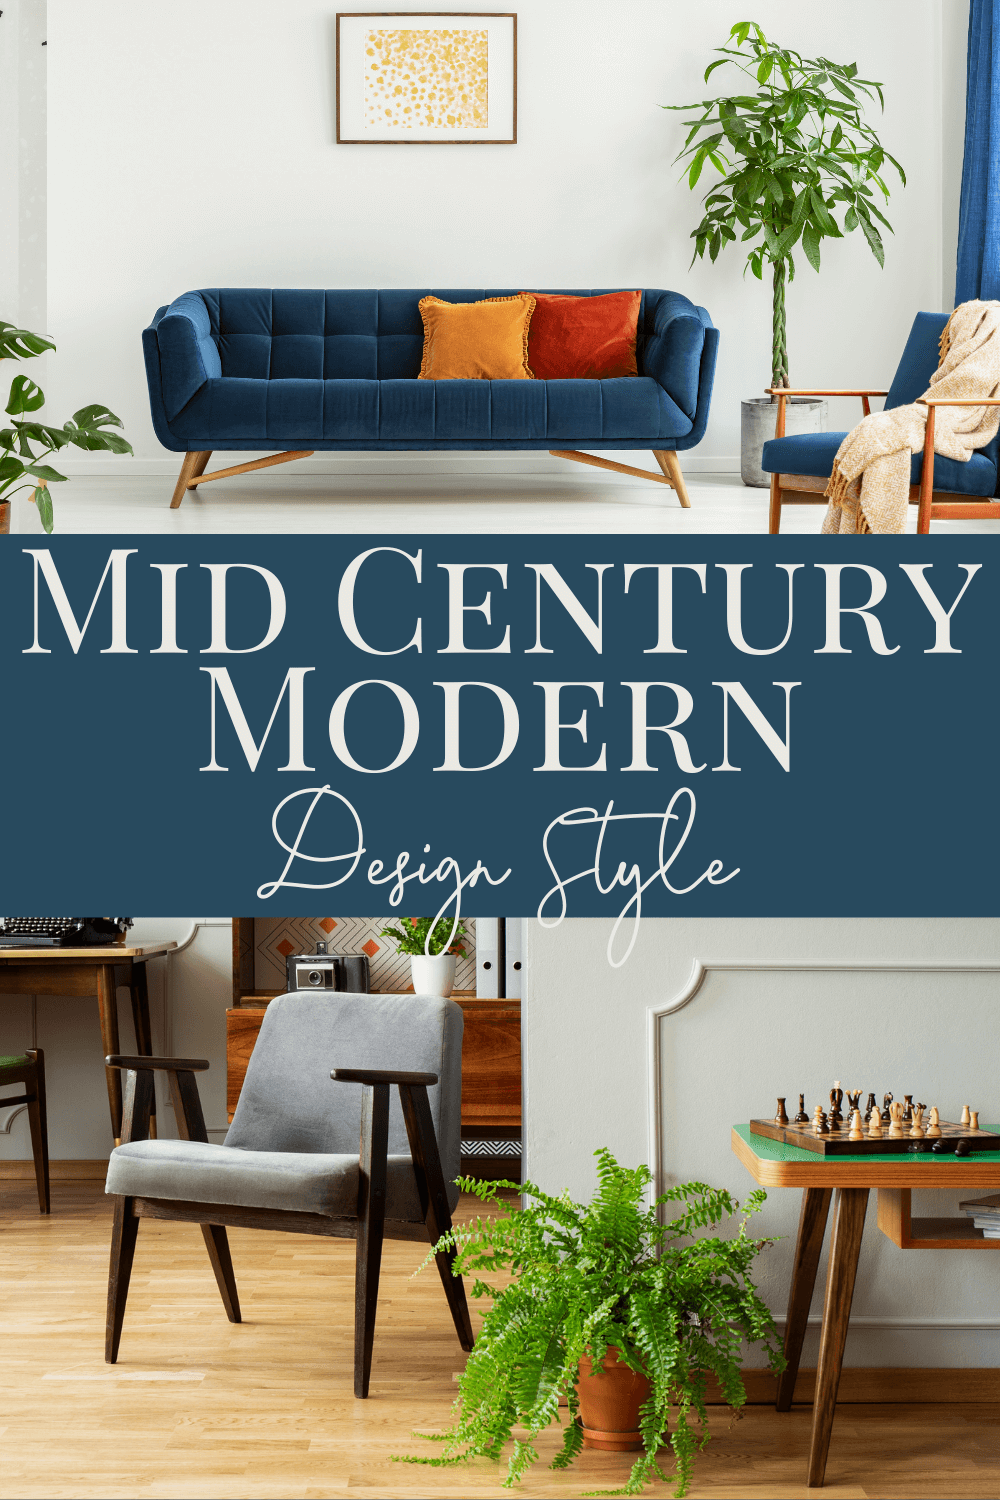 Design Style - Mid-Century Modern - Claire Jefford